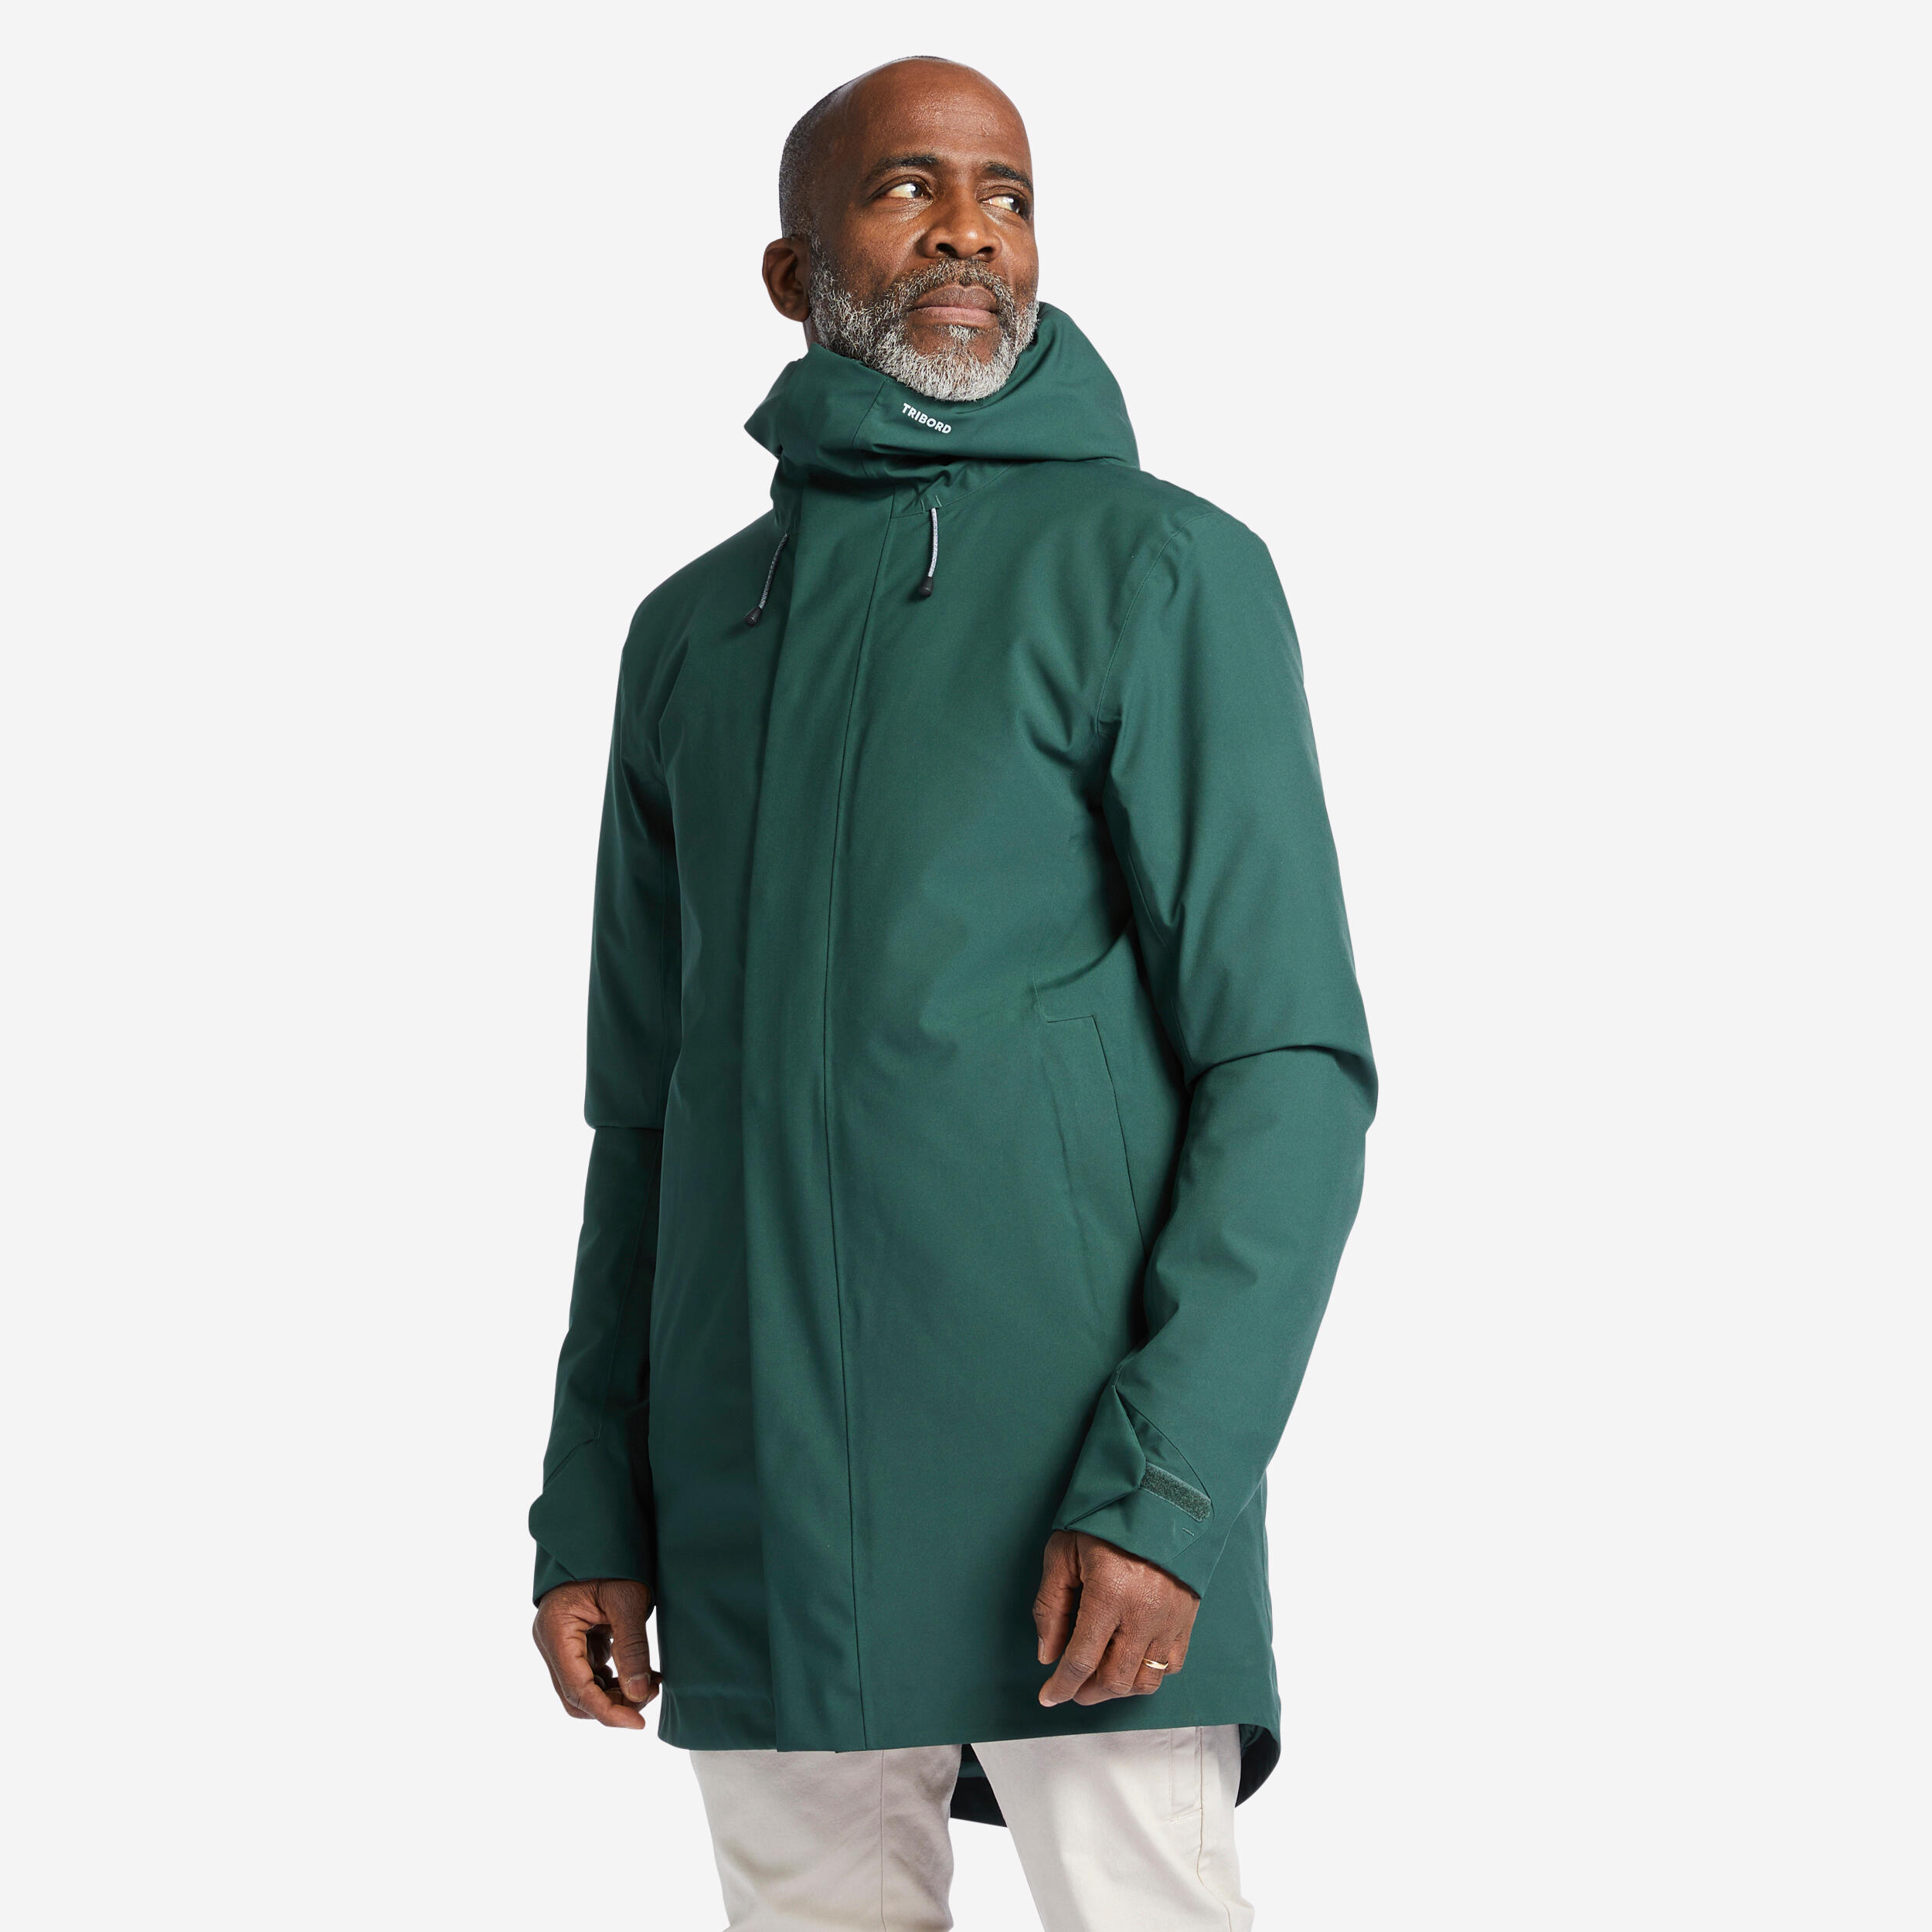 Men's warm waterproof windproof sailing jacket - SAILING 300 green 2/9